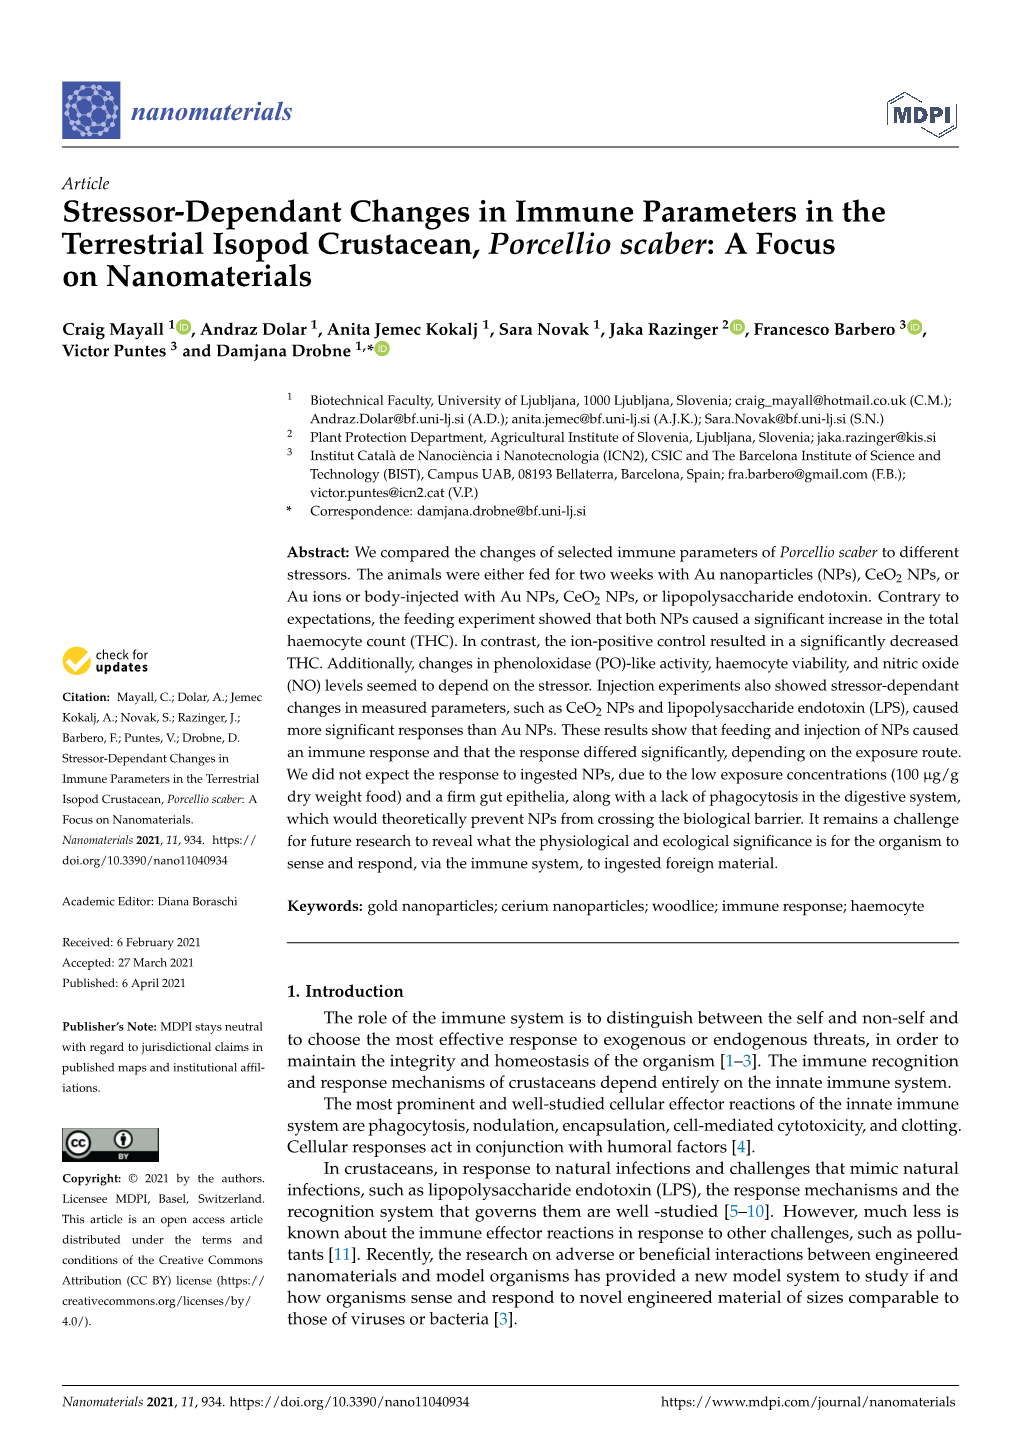 Stressor-Dependant Changes in Immune Parameters in the Terrestrial Isopod Crustacean, Porcellio Scaber: a Focus on Nanomaterials